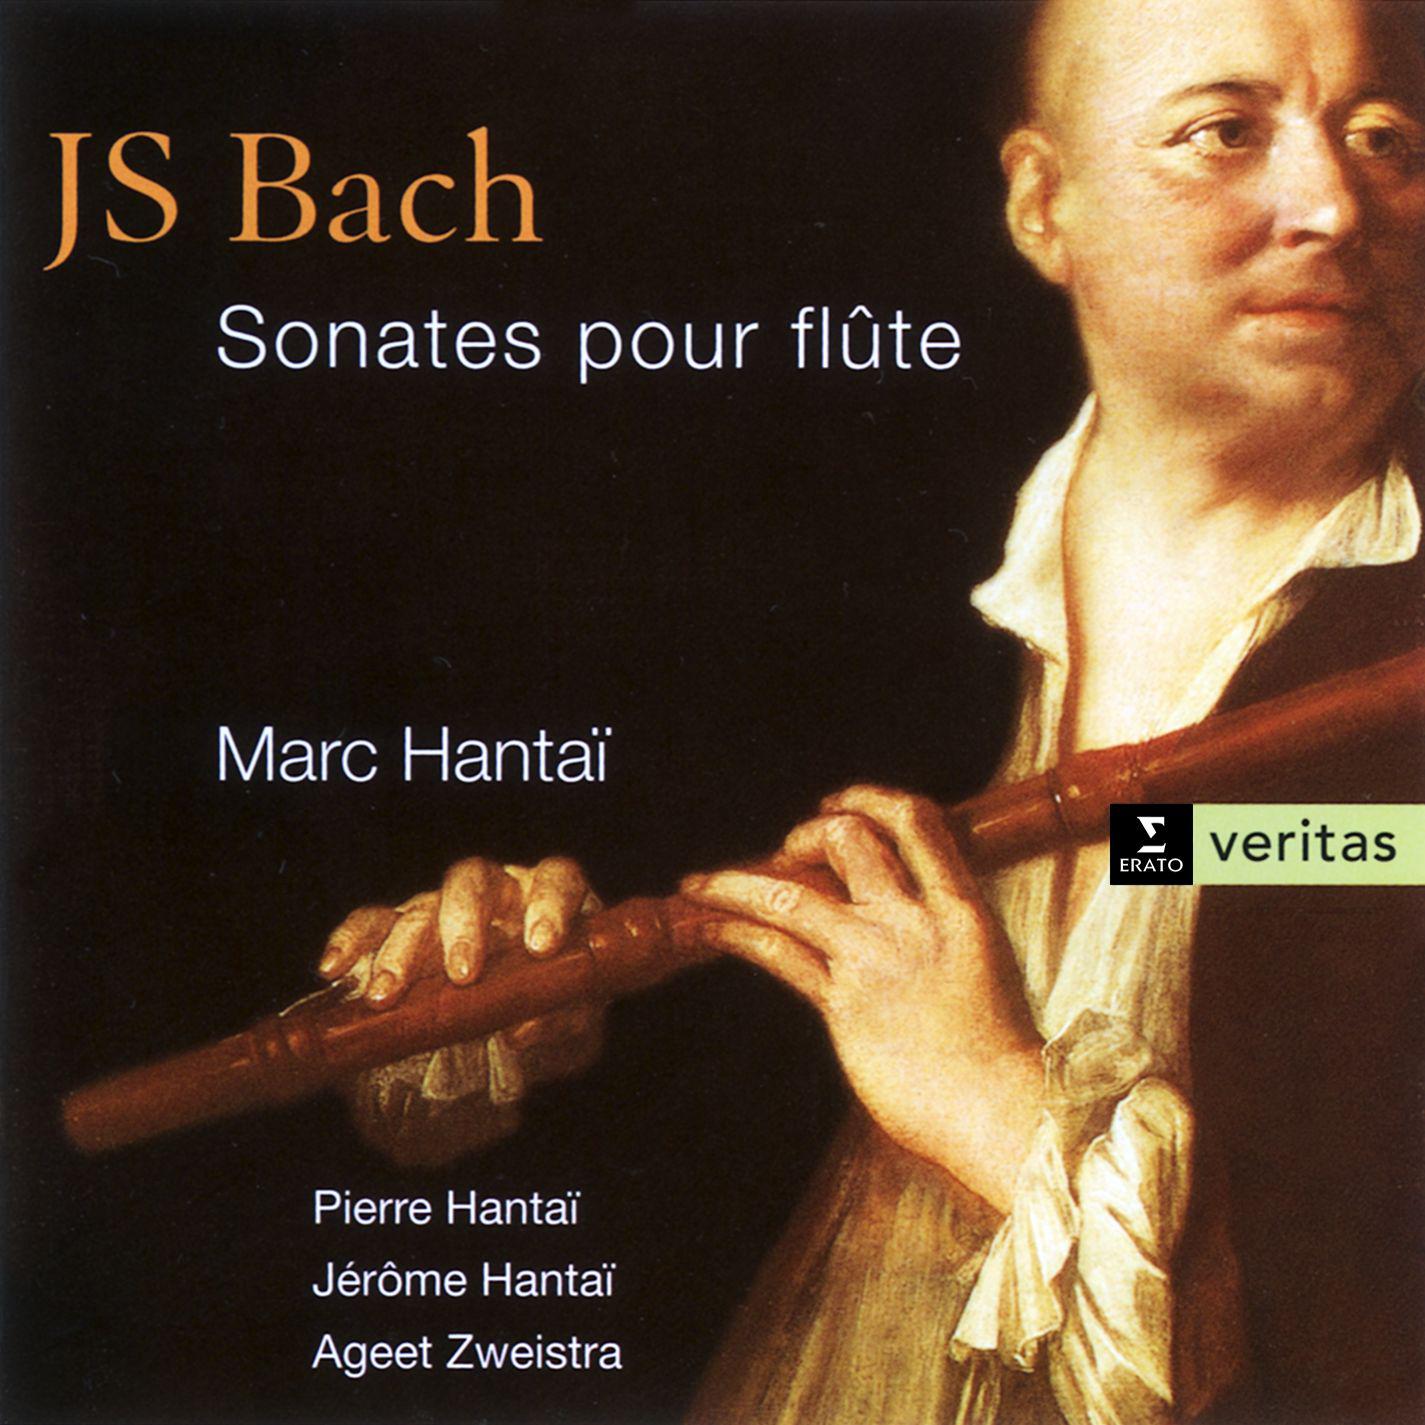 Sonata in A major for Flute and Harpsichord BWV1032: Largo e dolce